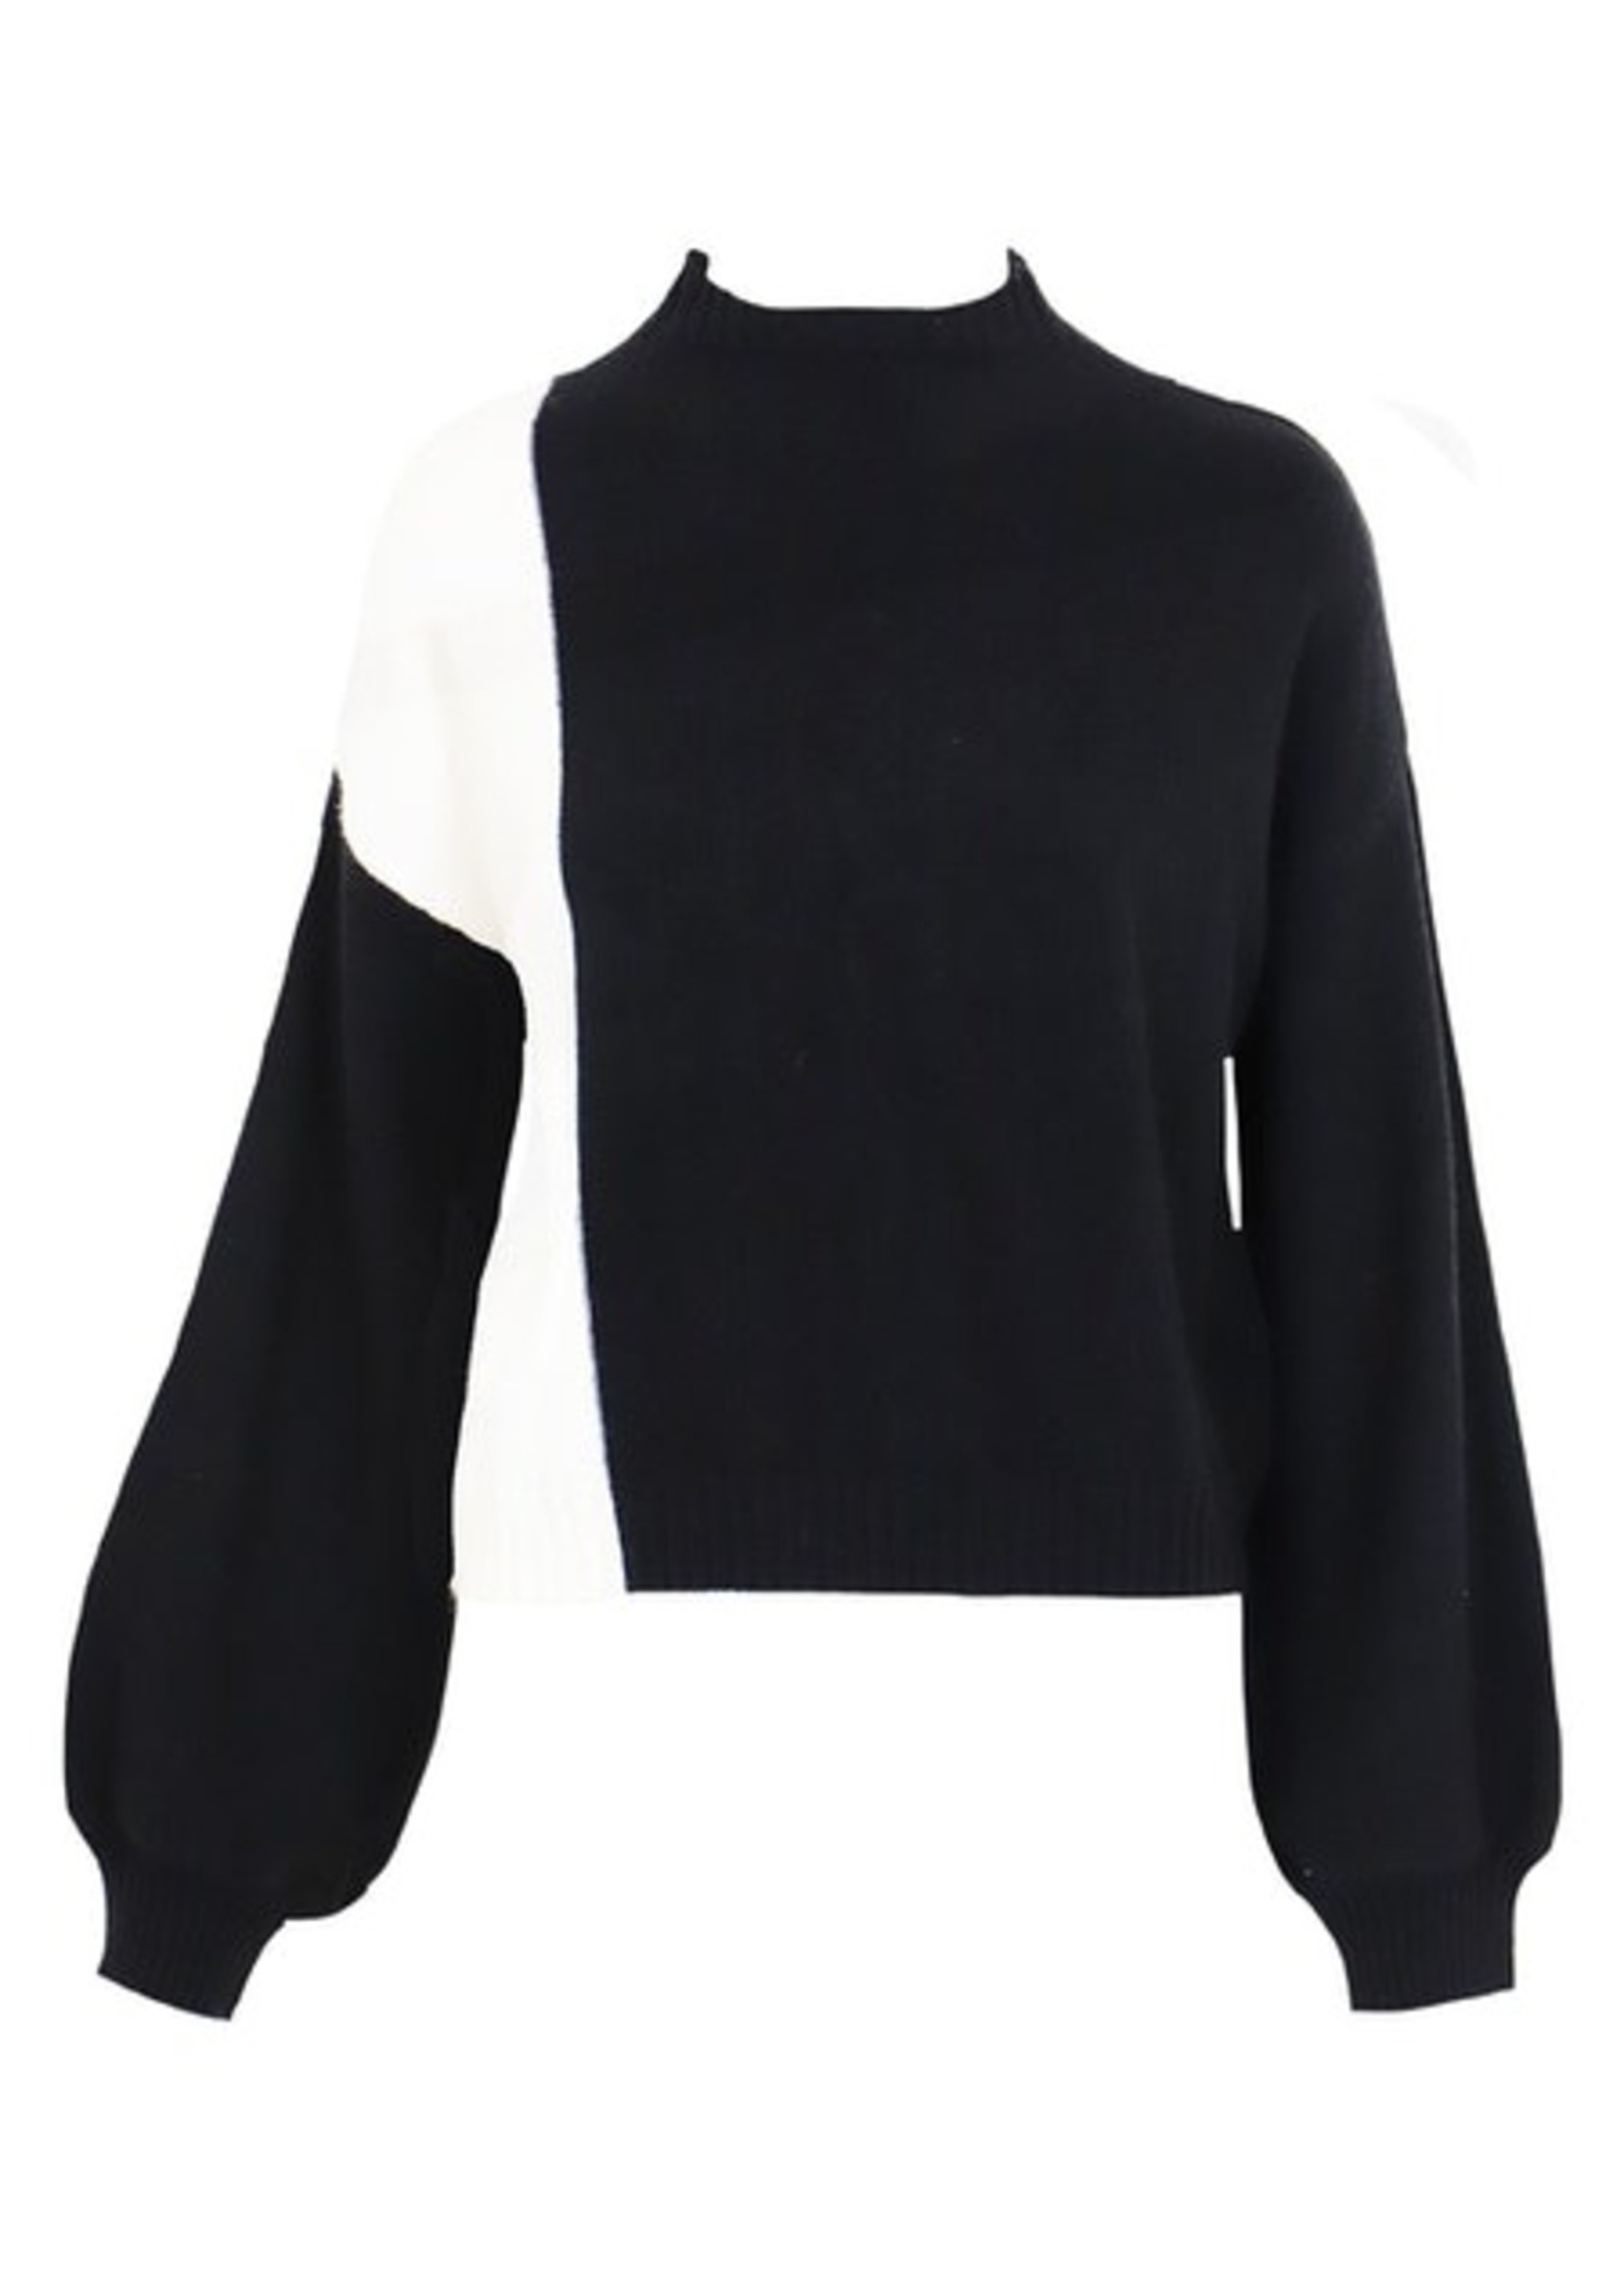 Jenna Colorblock Sweater Blk/White